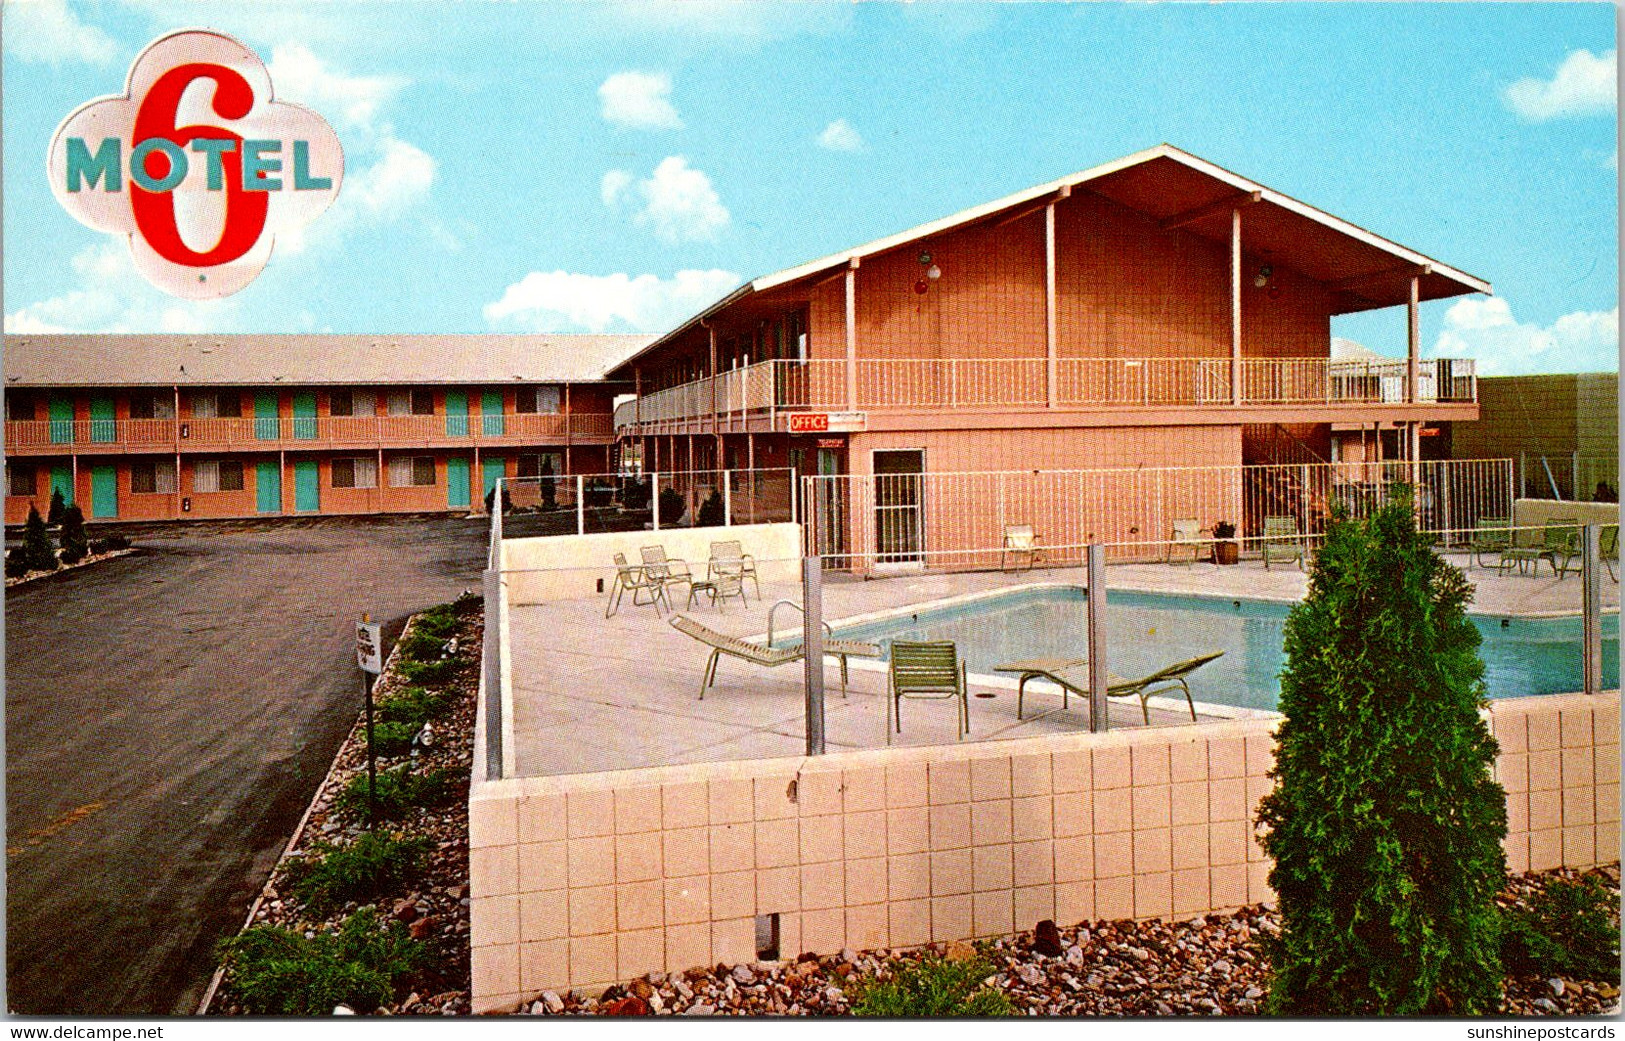 Motel 6 Davenport Iowa - Davenport